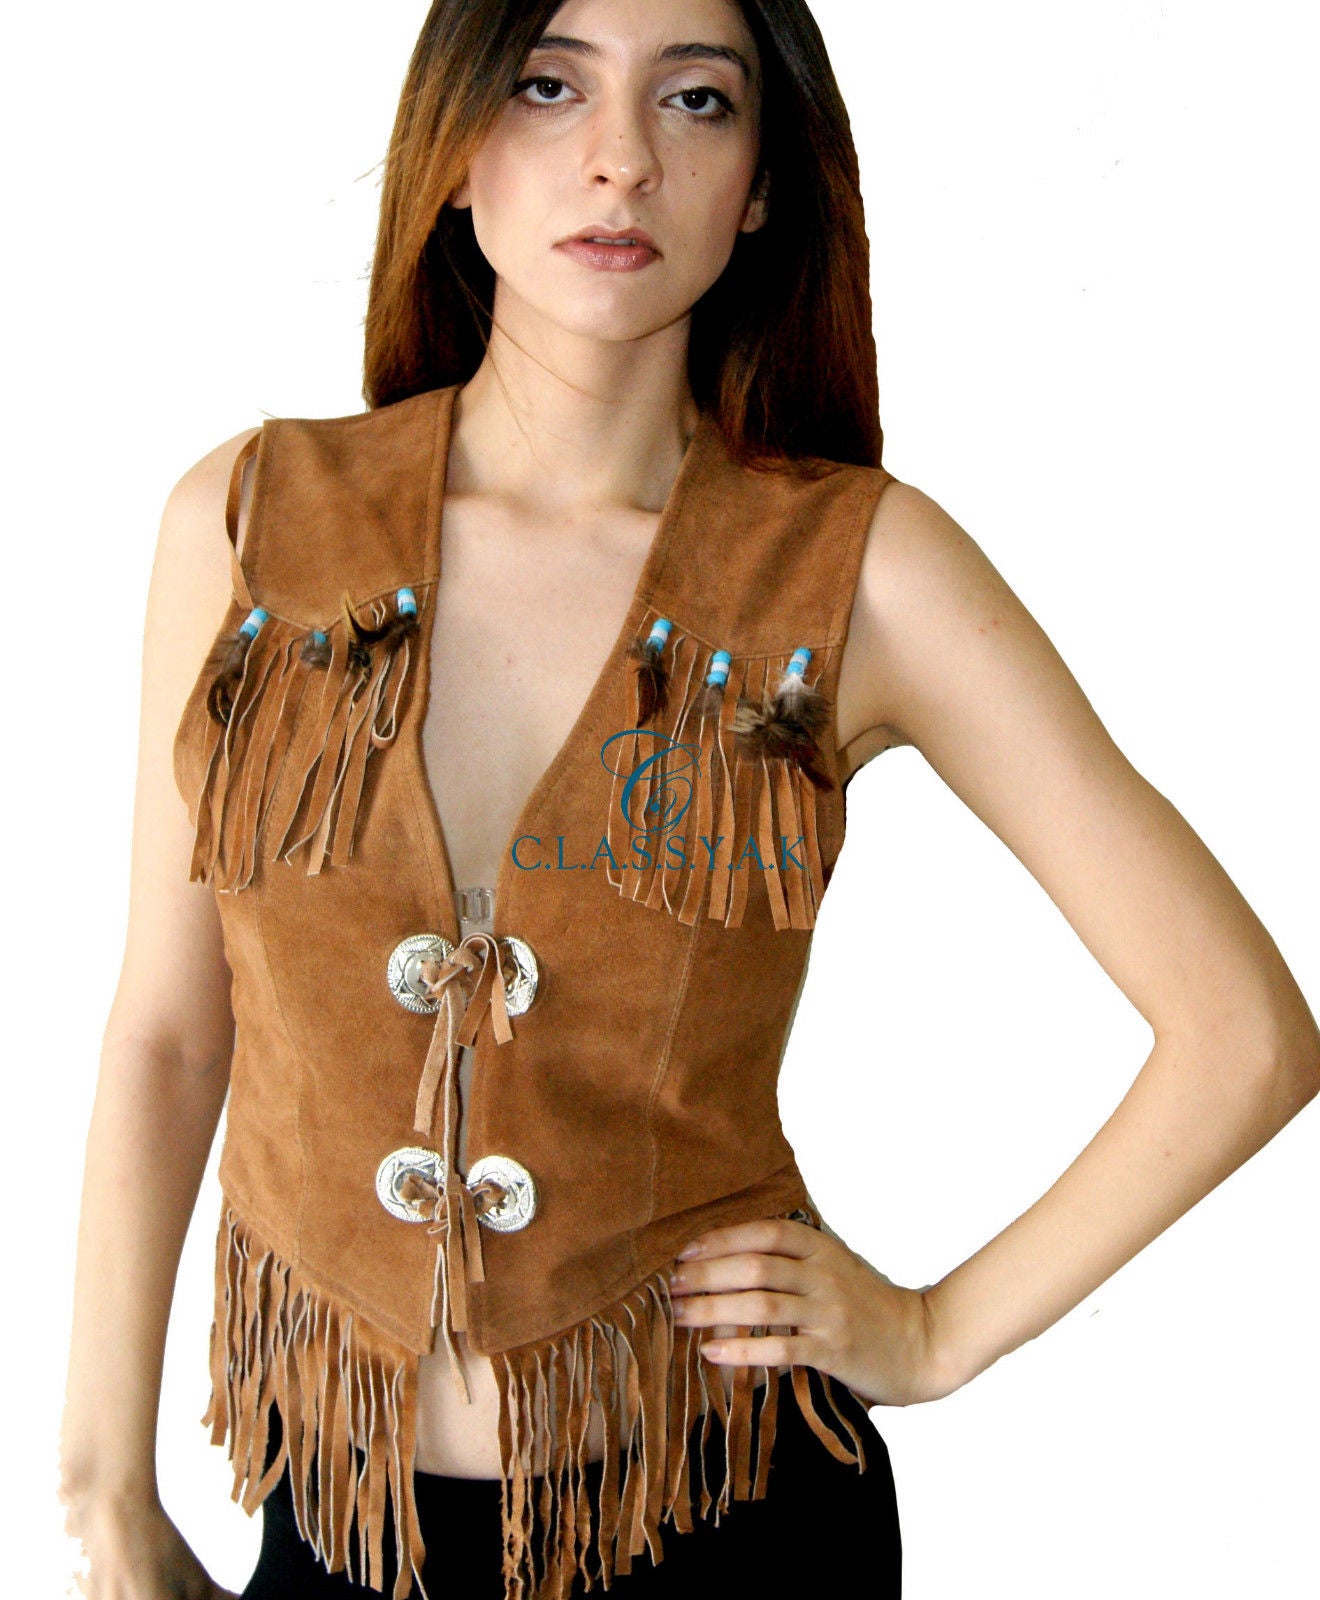 Classyak Western Original Leather Vest for Women - Premiere Suede Leather